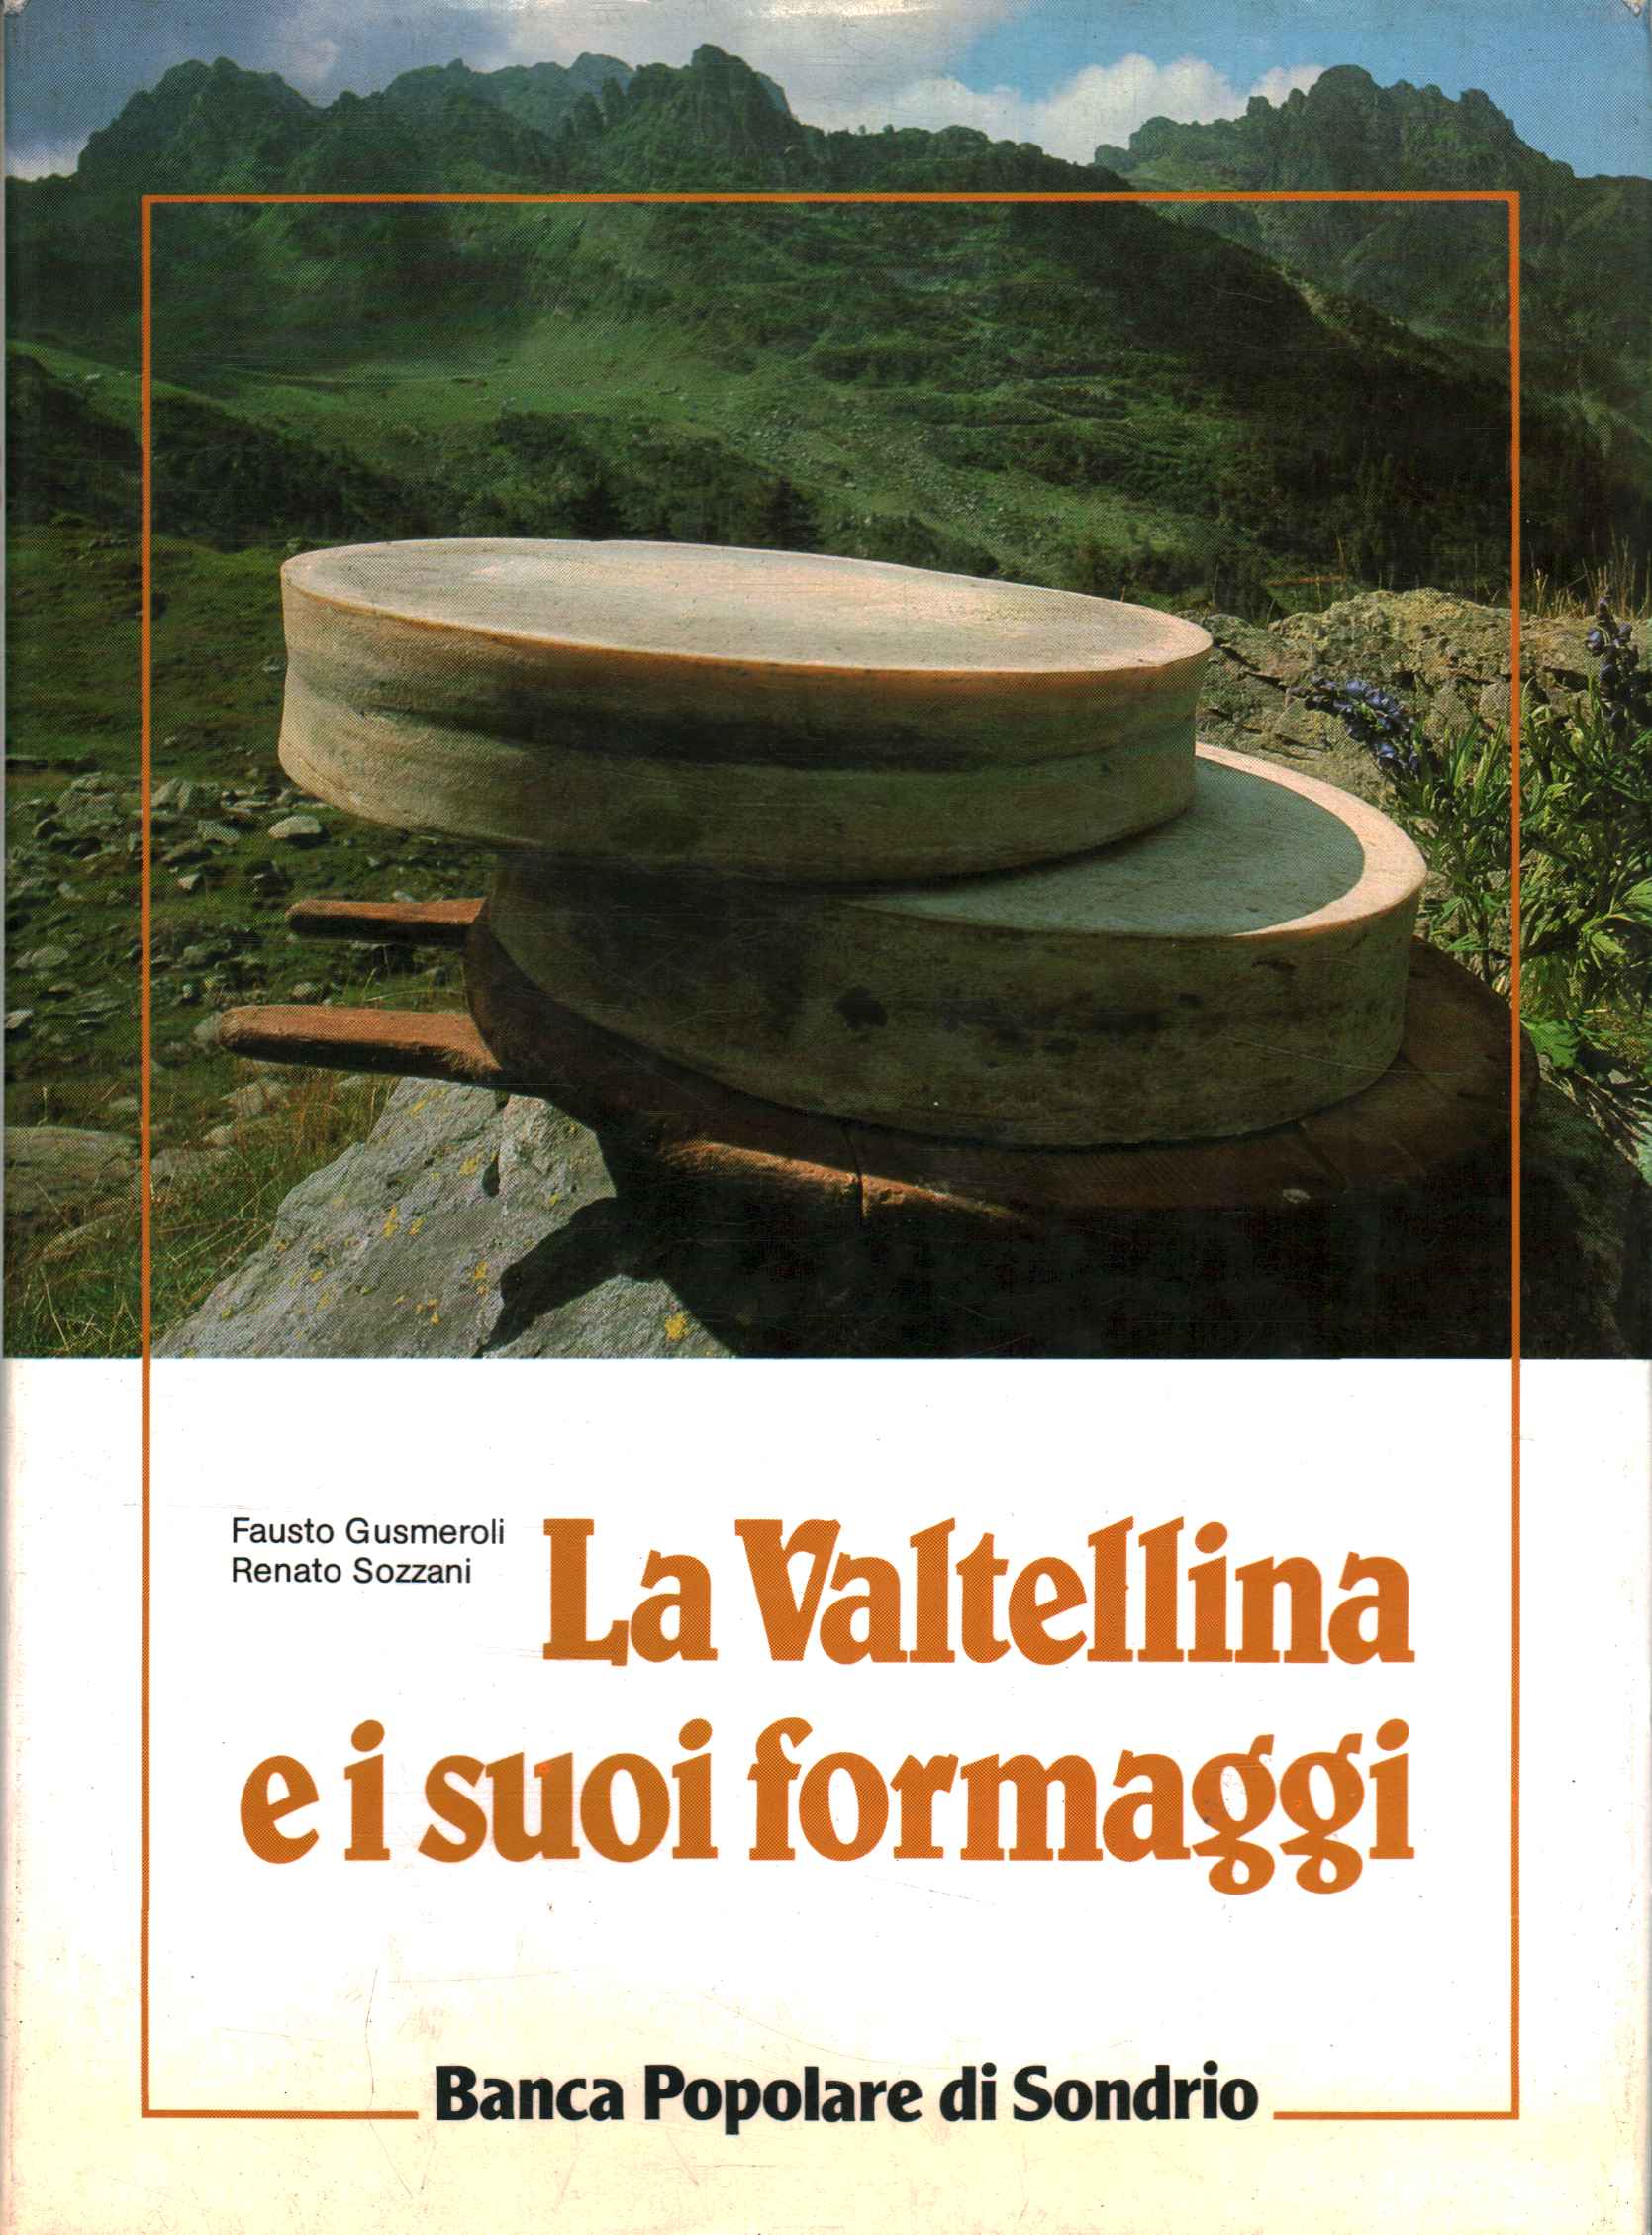 Valtellina and cheeses